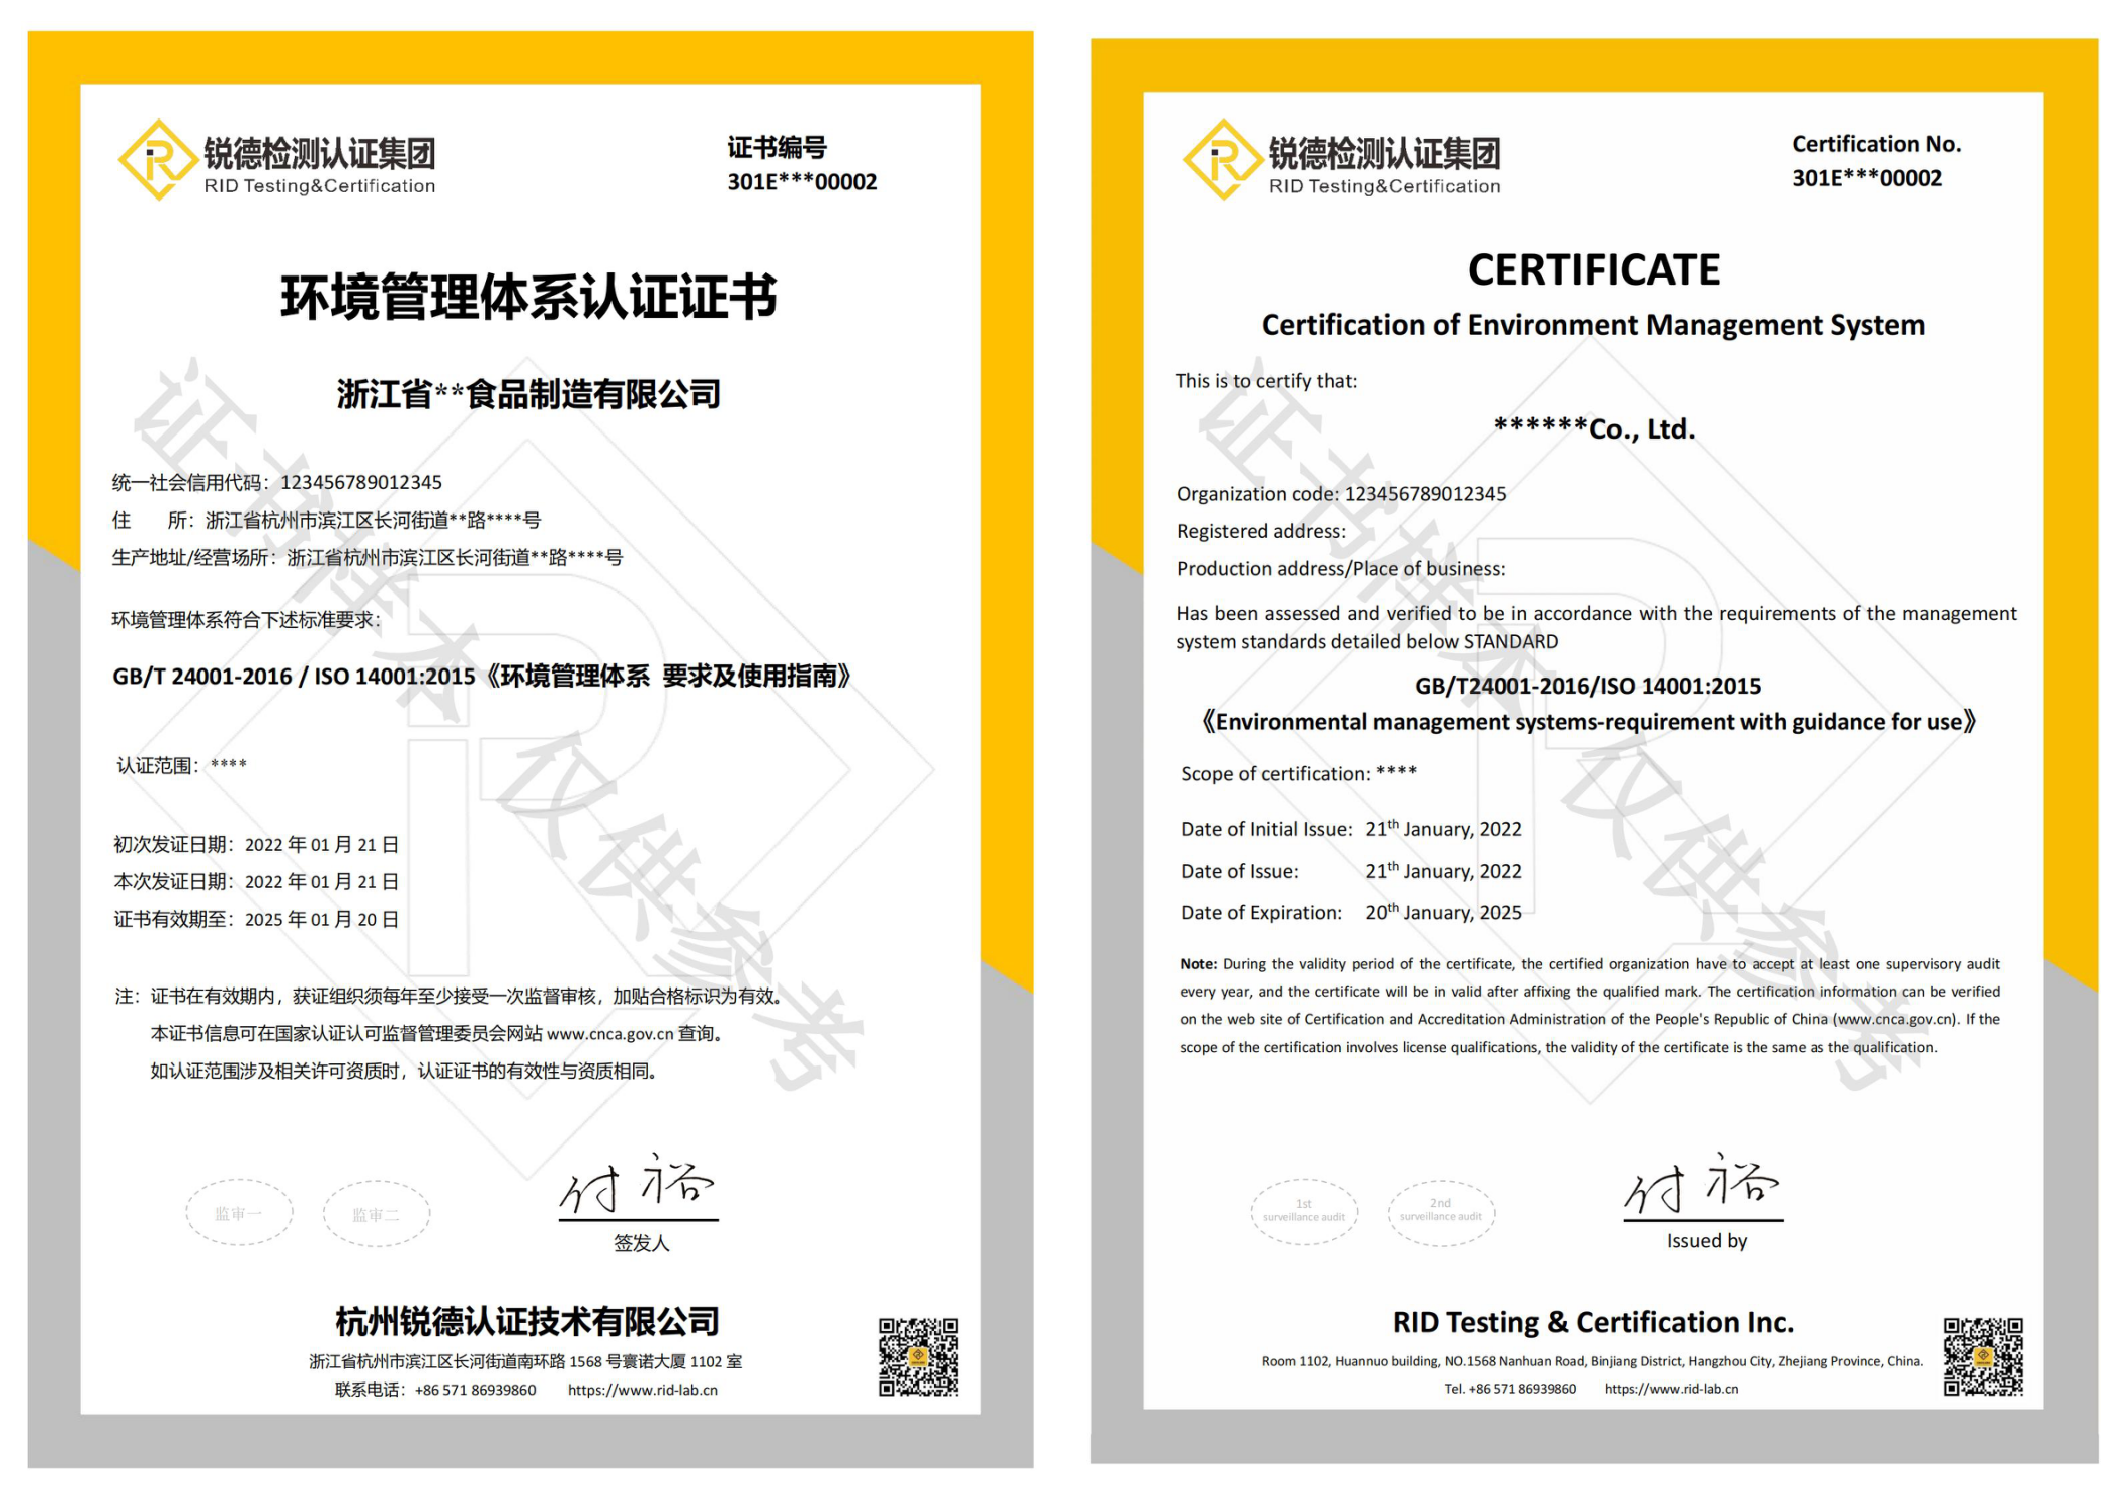 ISO 14001 环境管理体系认证